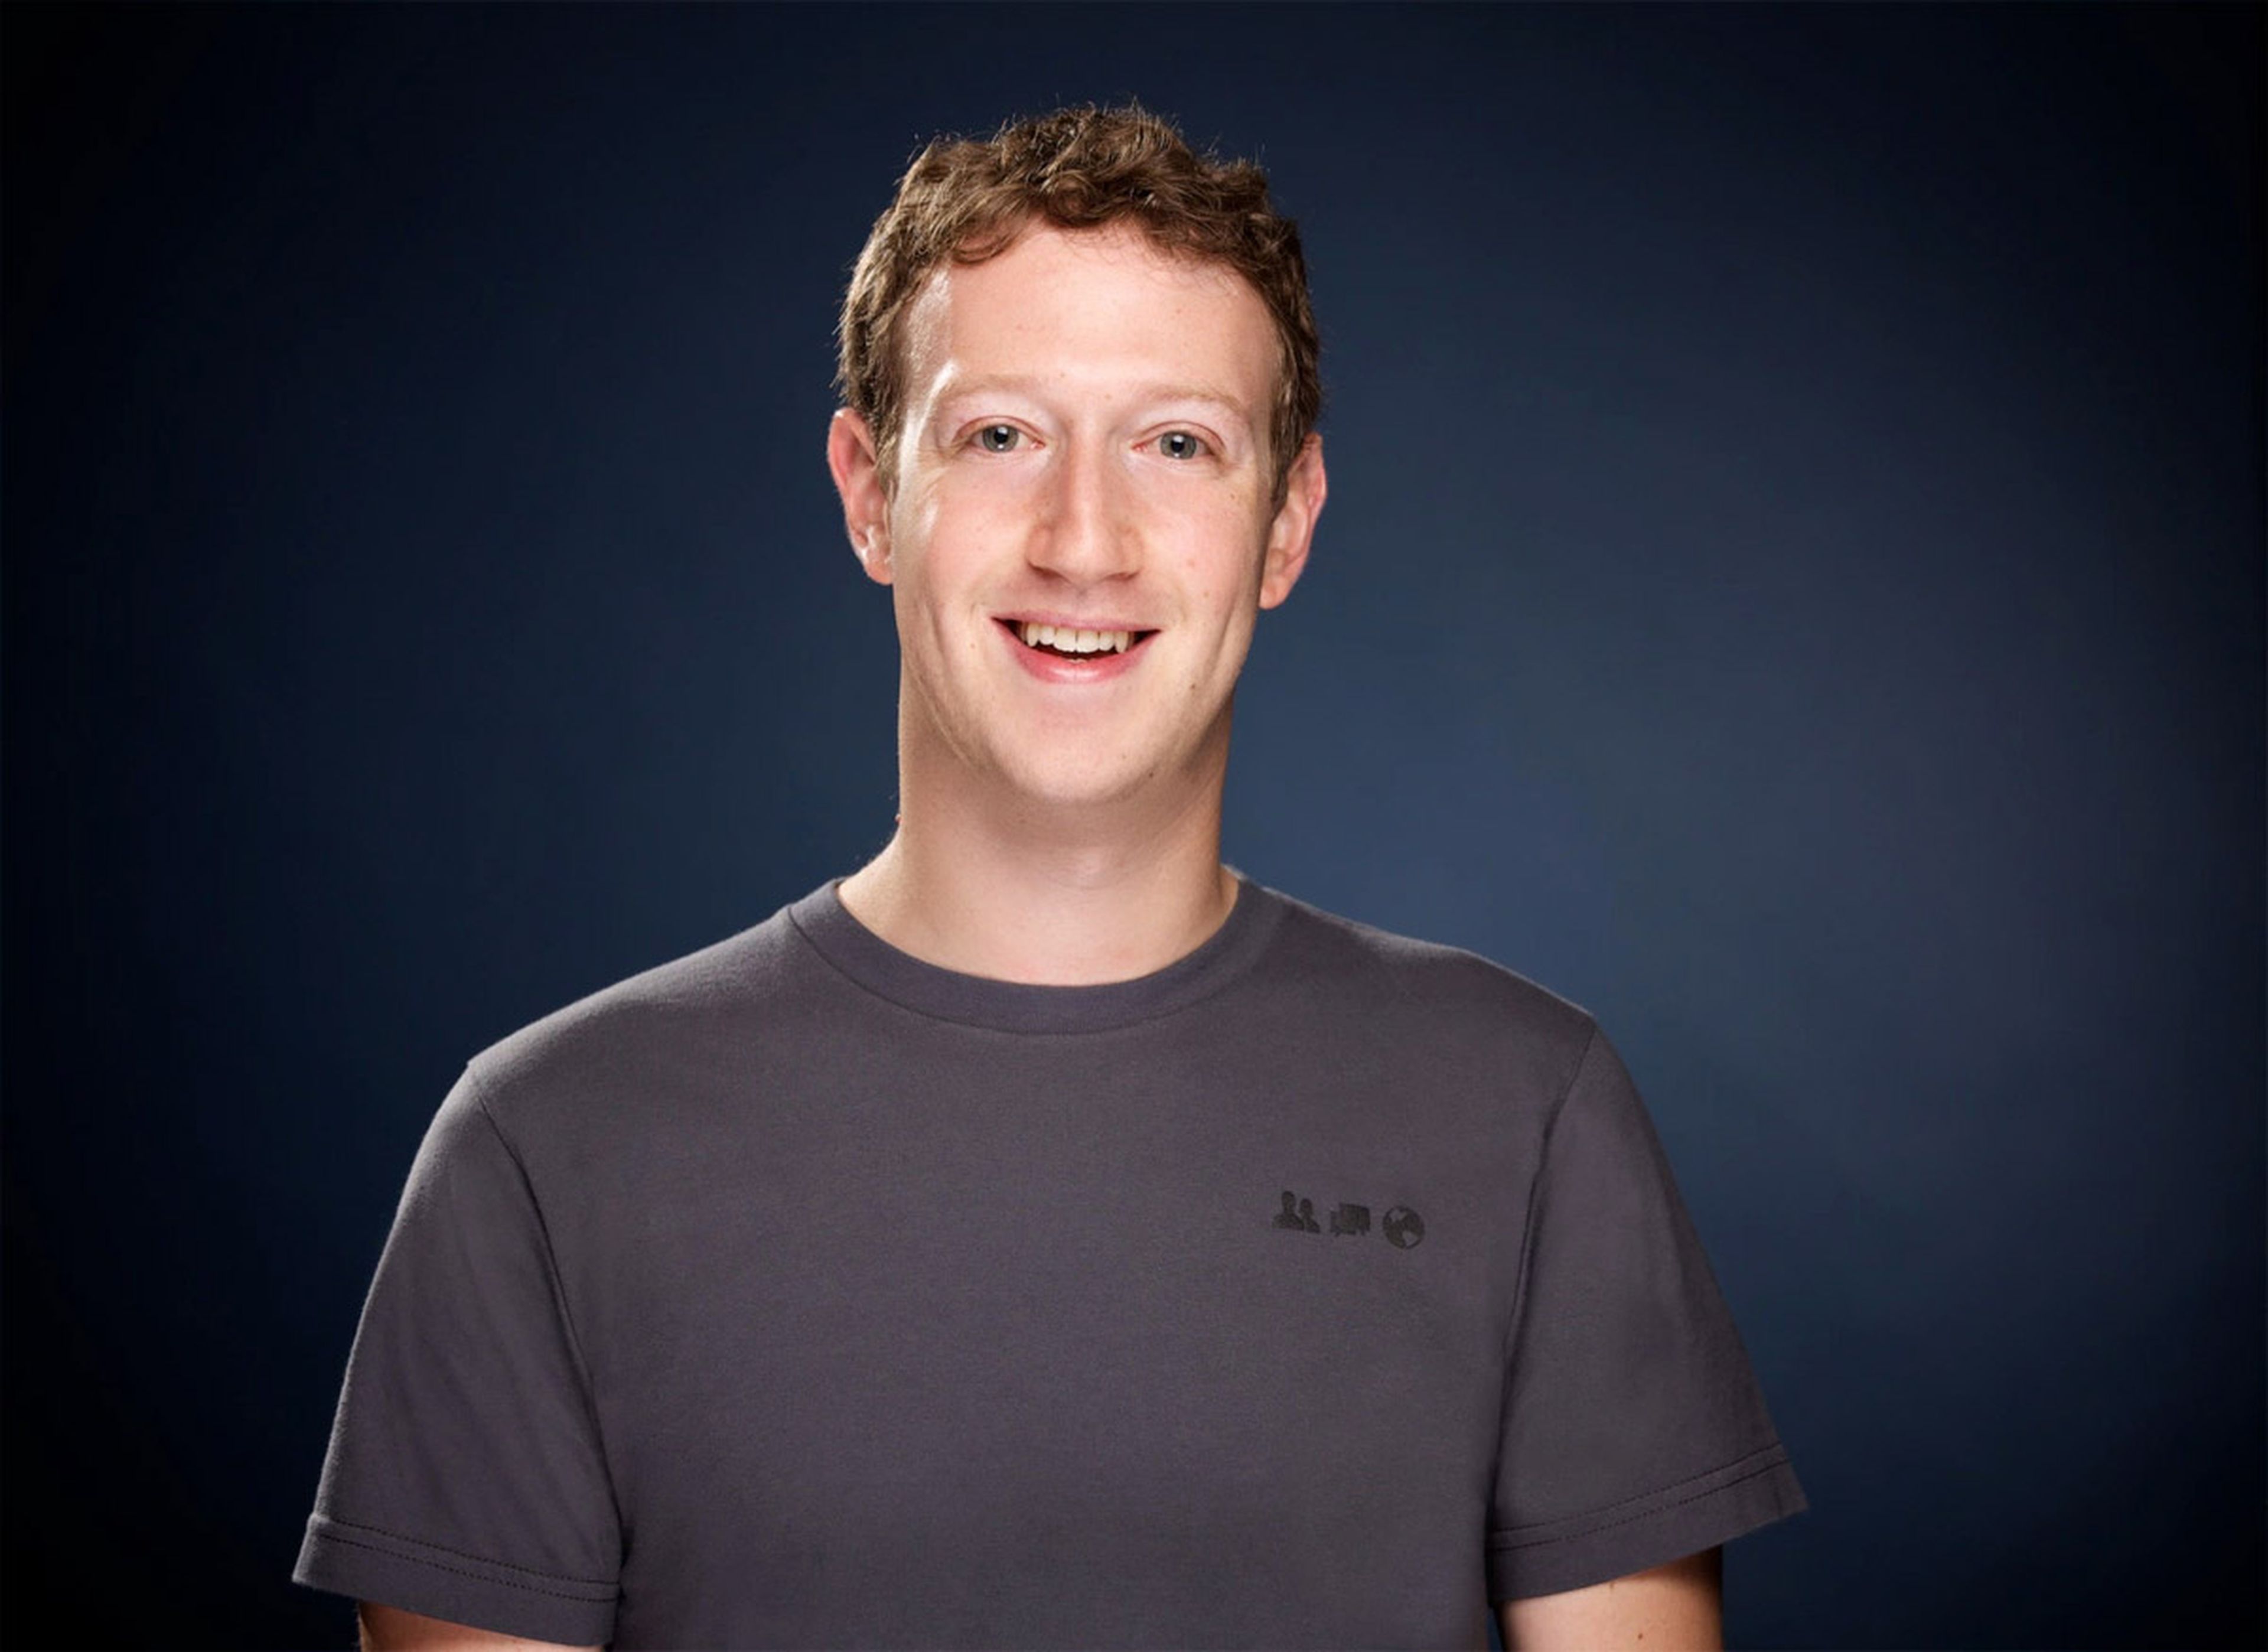 Zuckerberg CEO Facebook